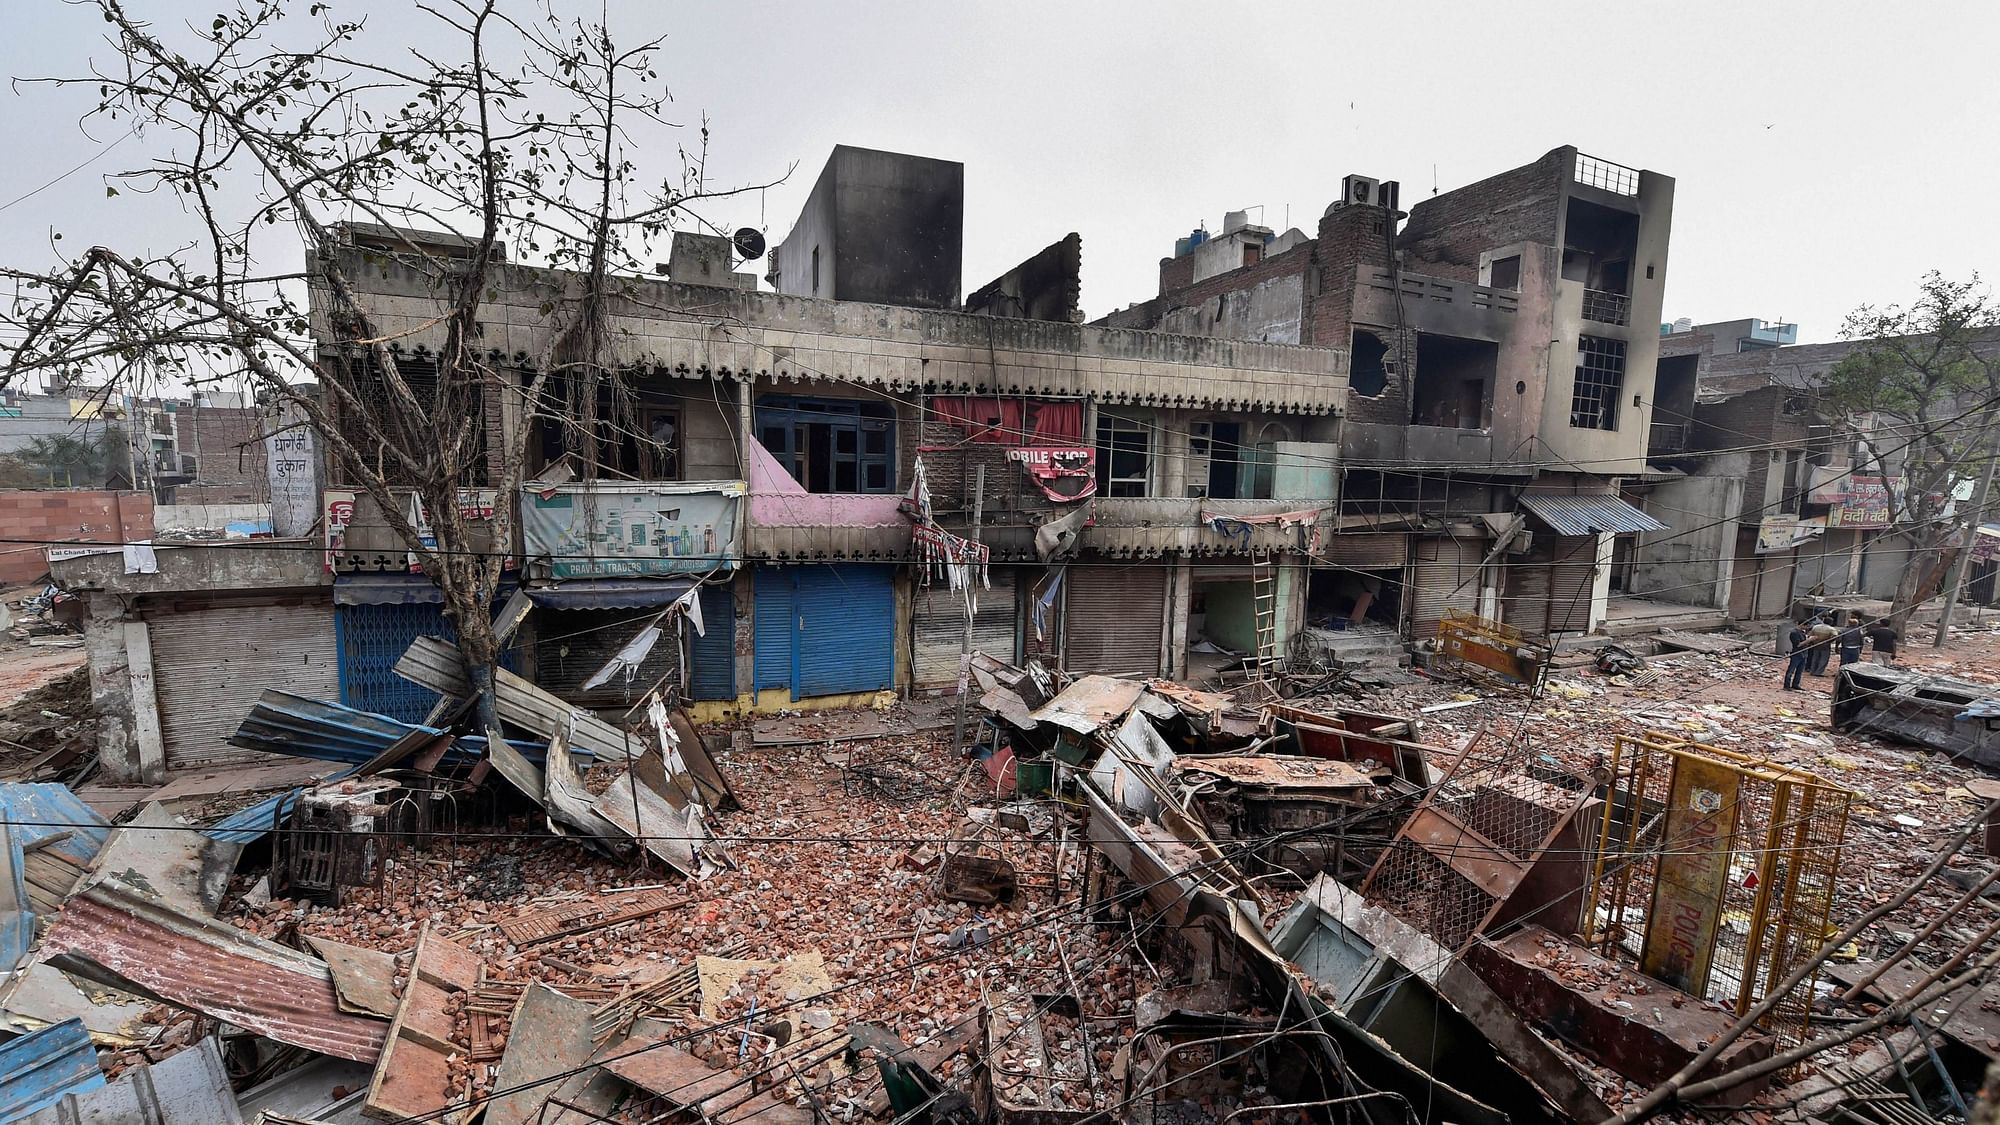 Violence erupted in northeast Delhi late in February.